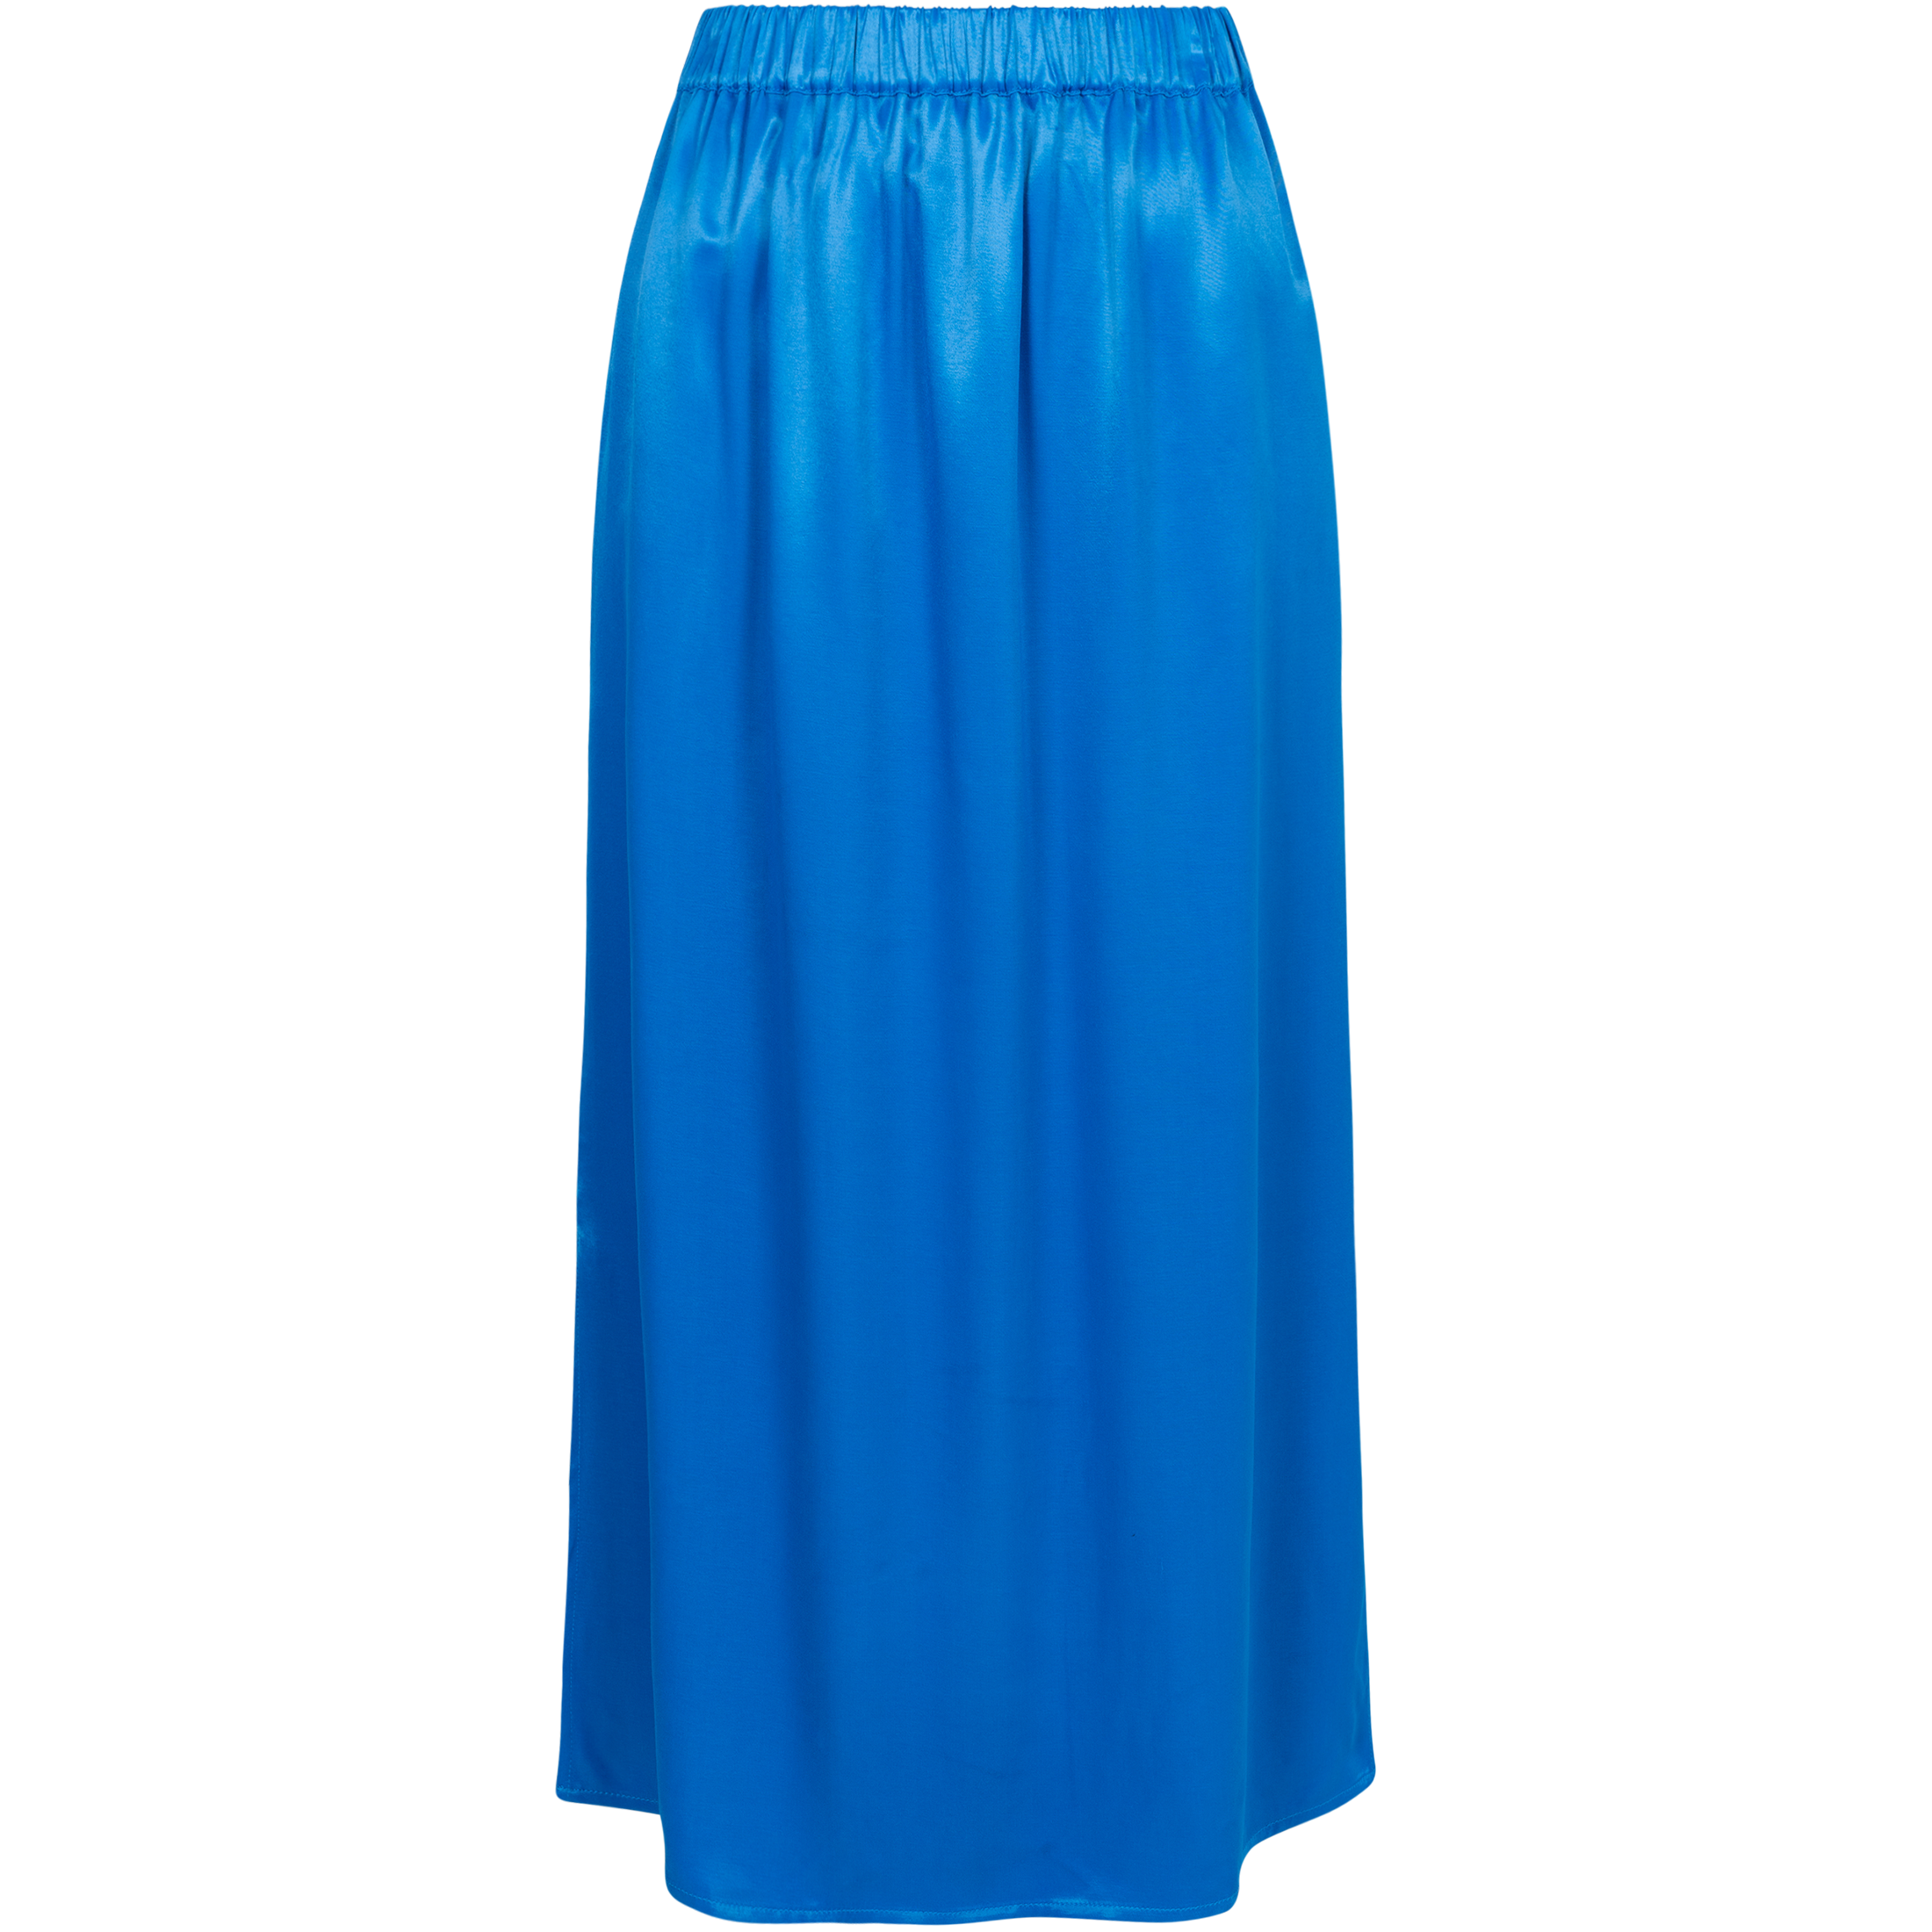 Portia Skirt - Strong Blue